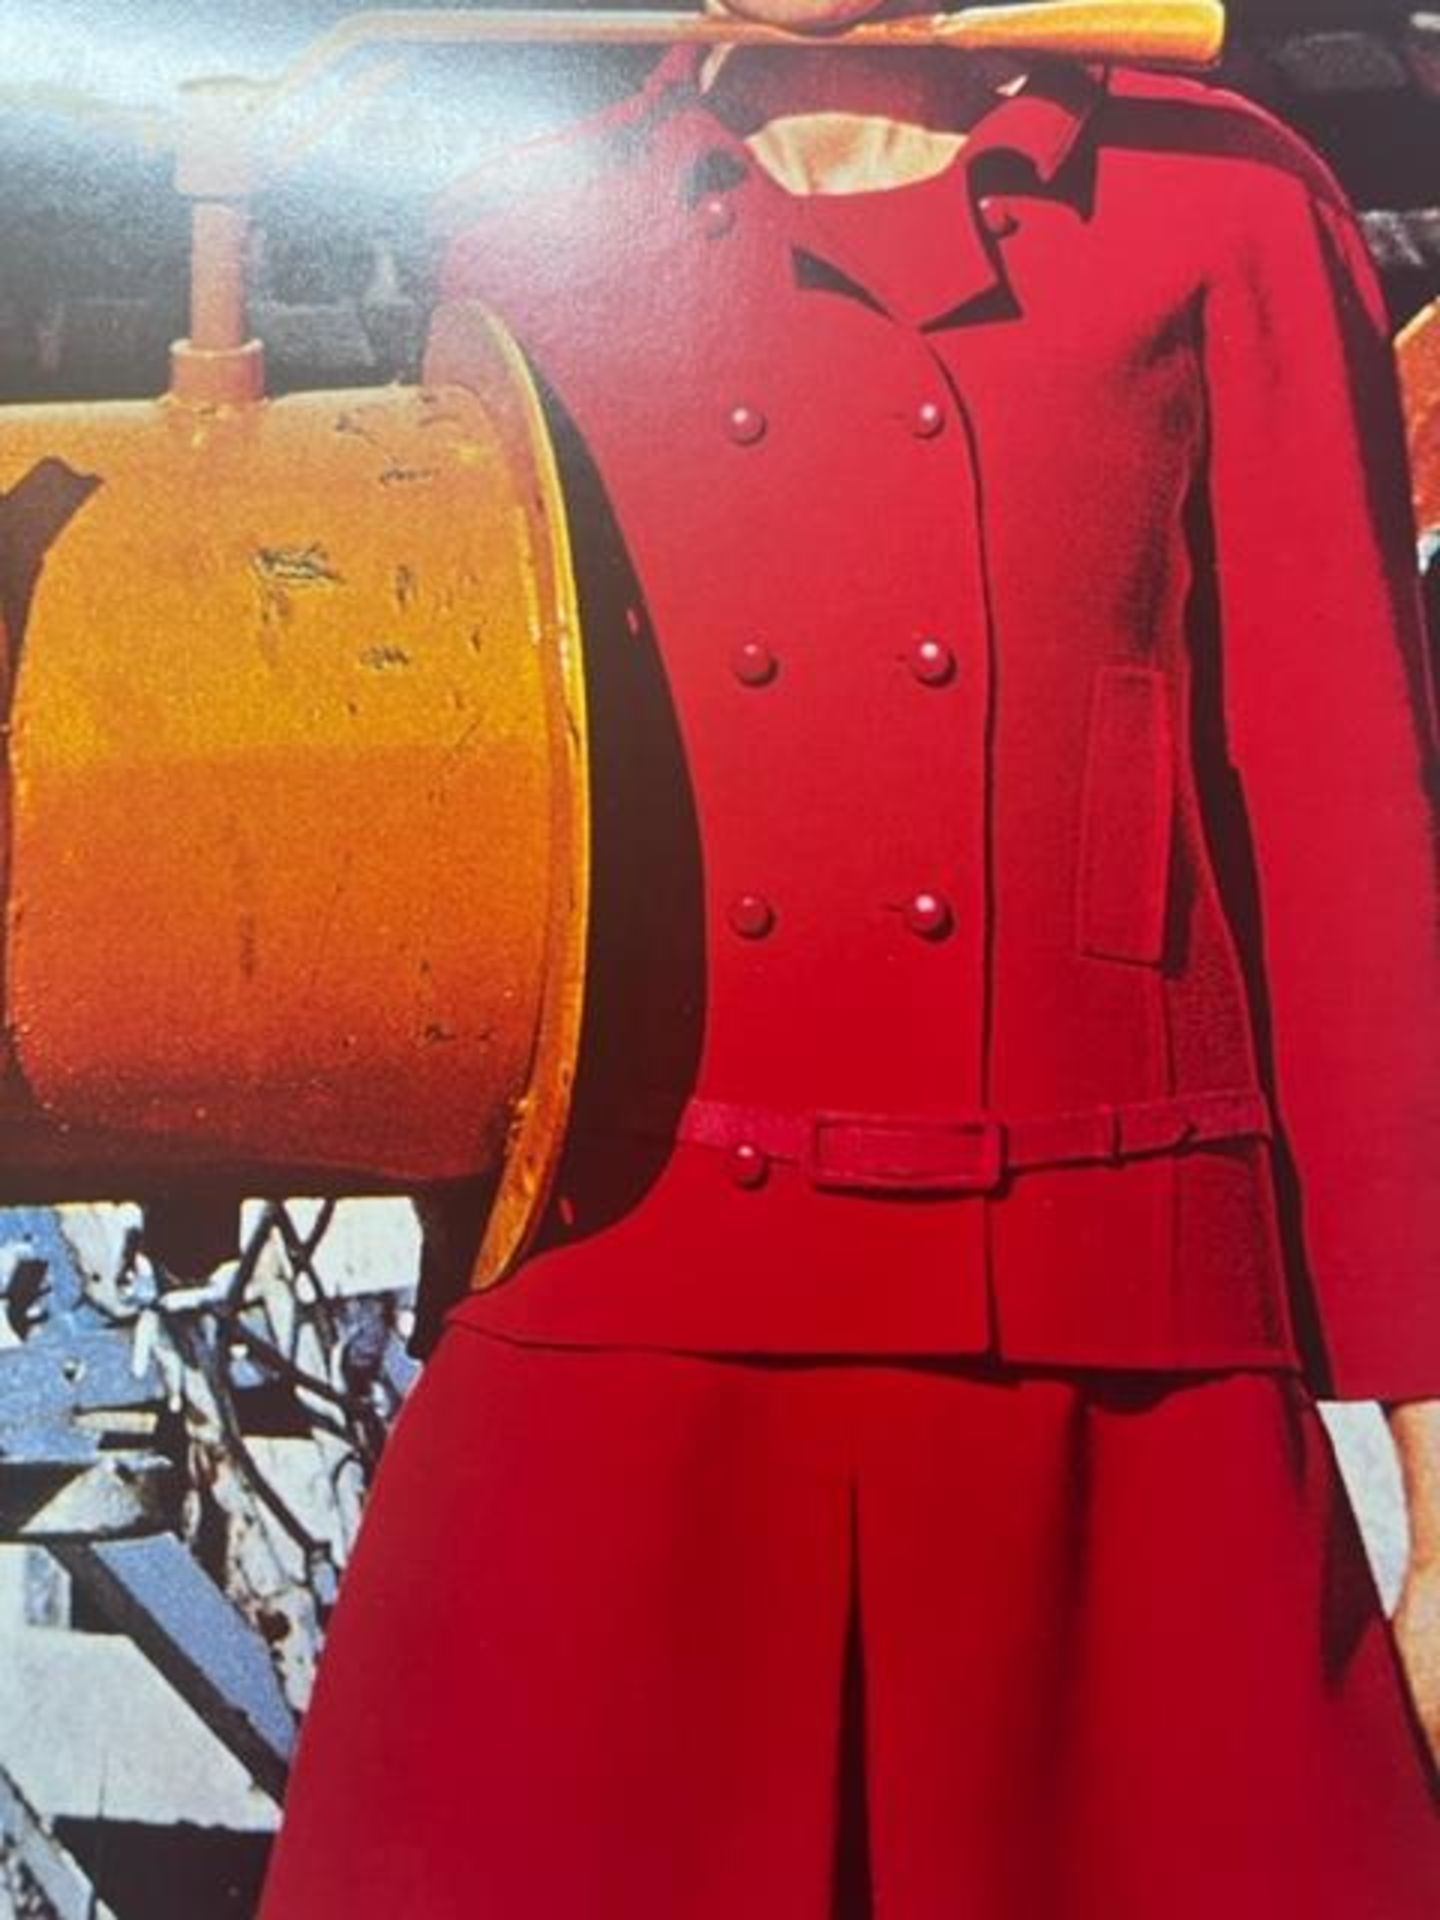 Helmut Newton "Italian Vogue" Print. - Image 5 of 6